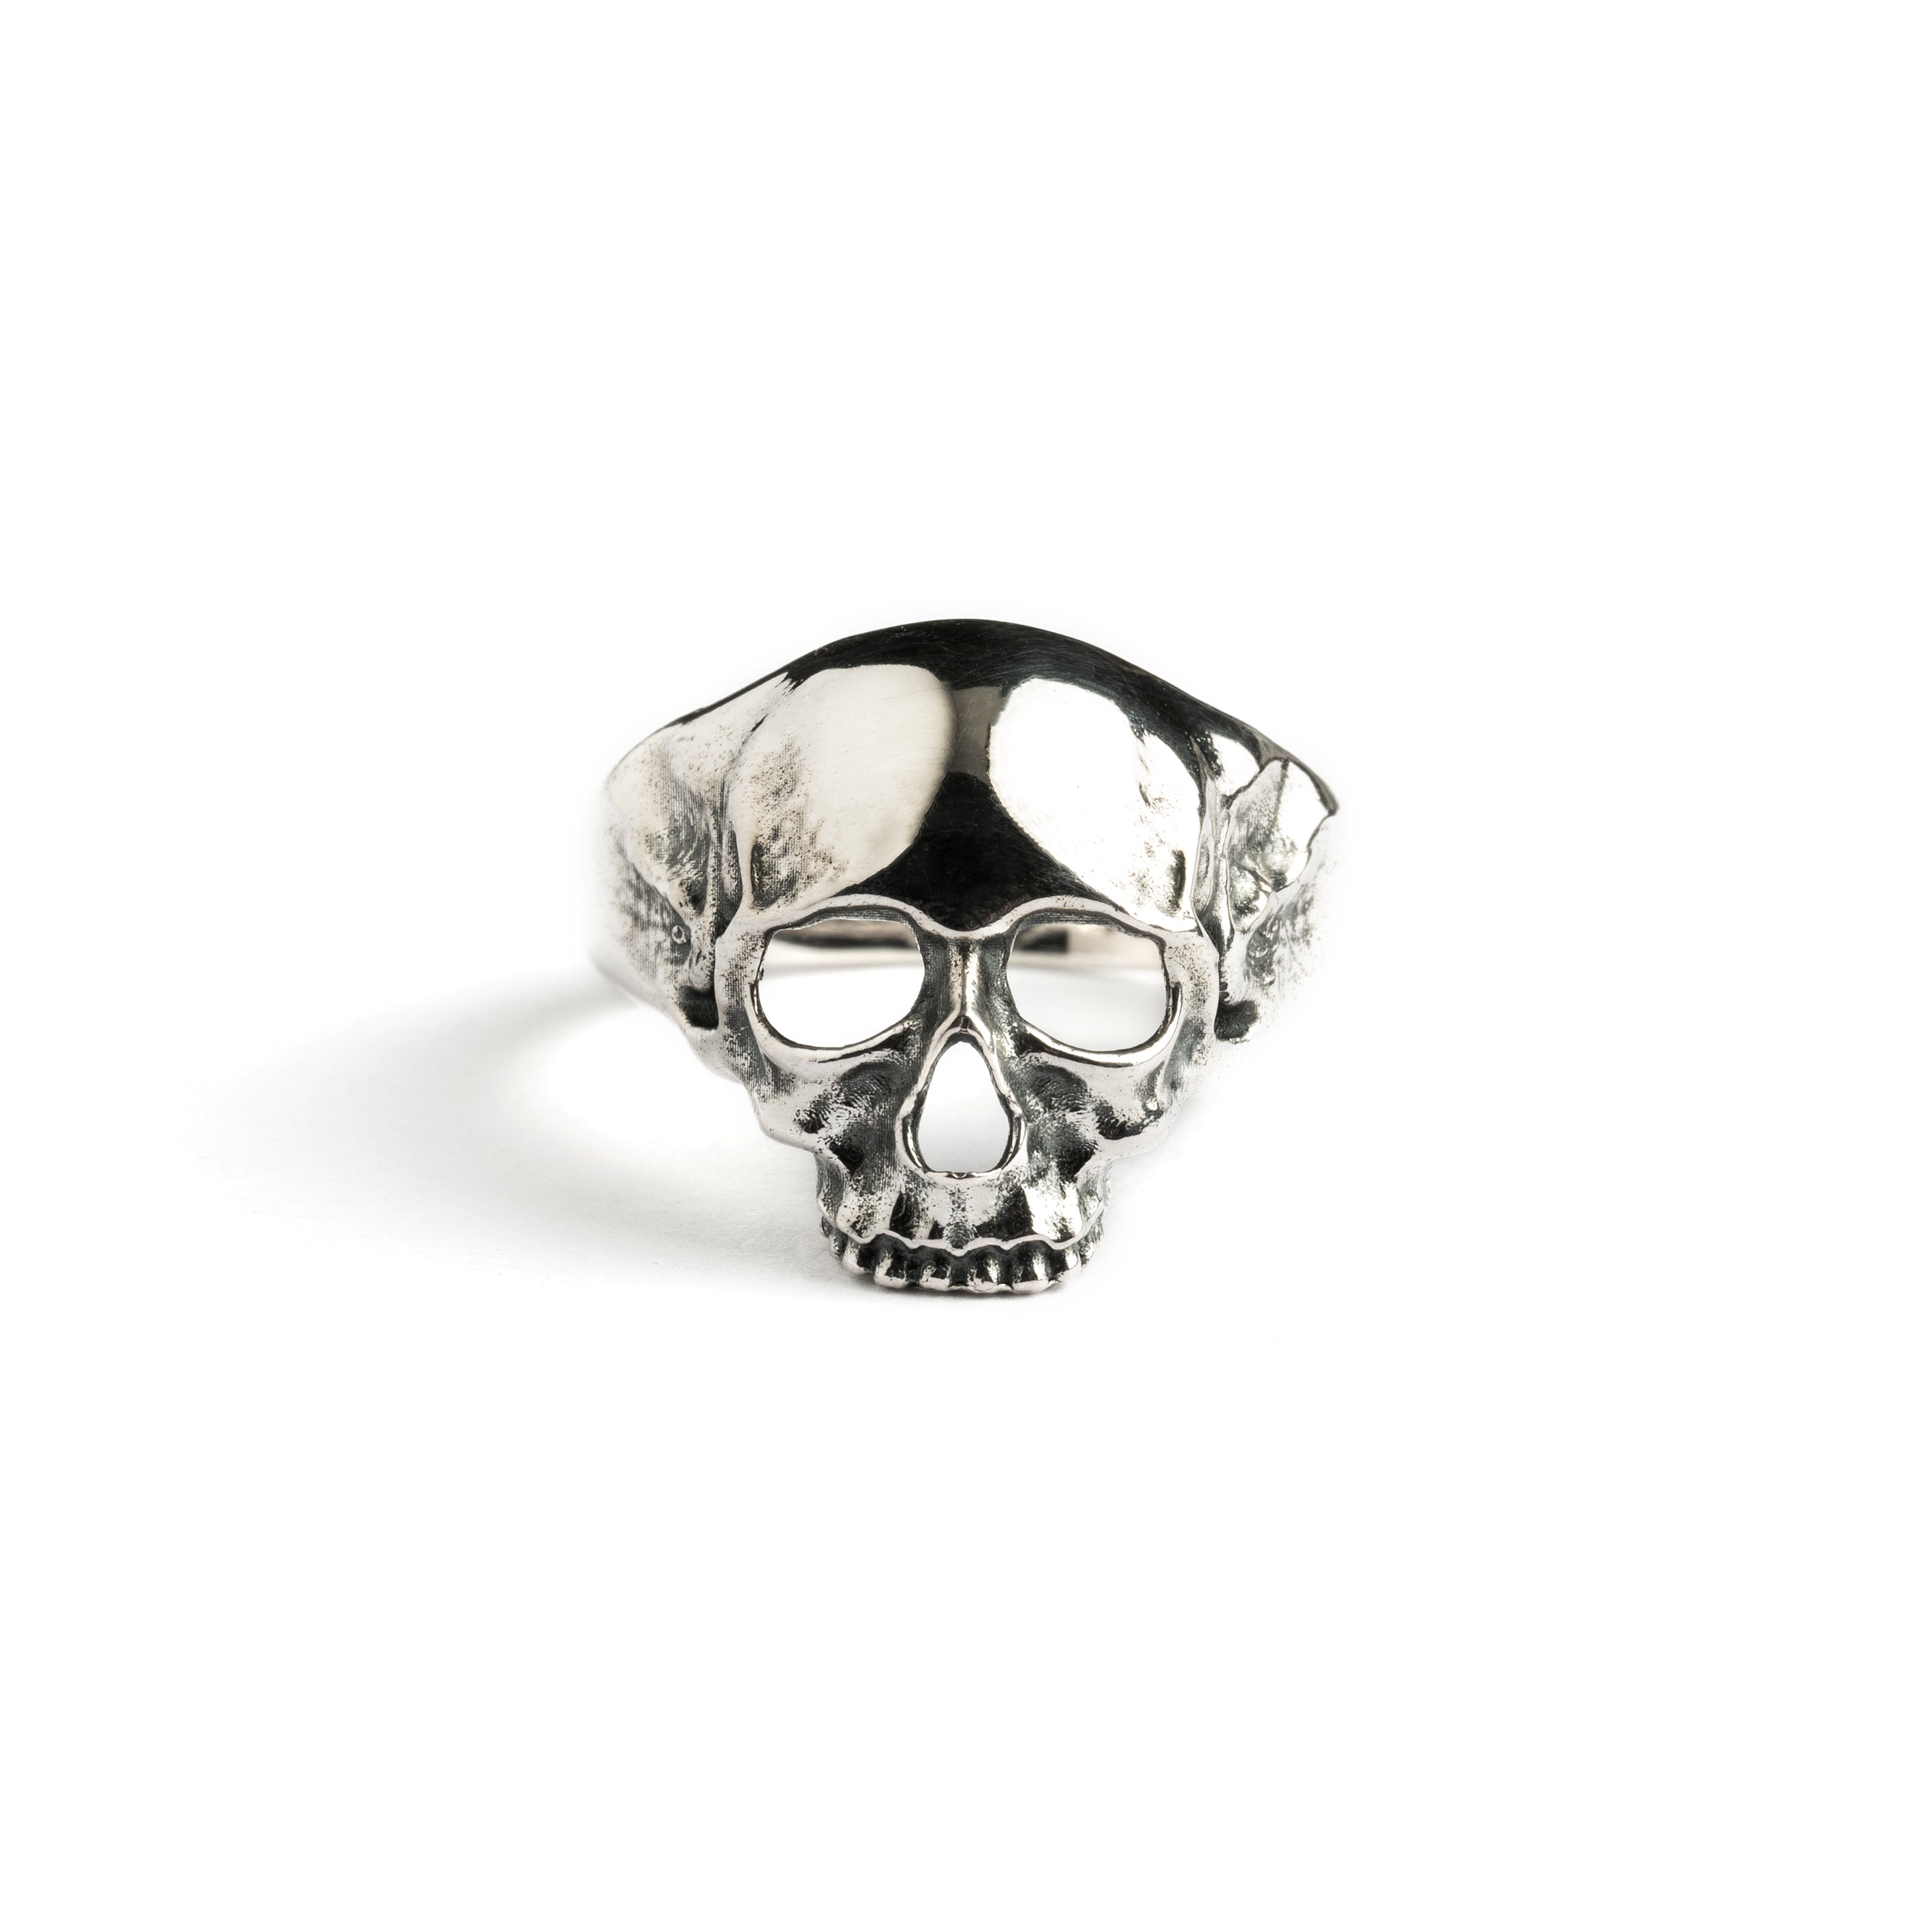 Silver Immortal Skull Ring frontal view